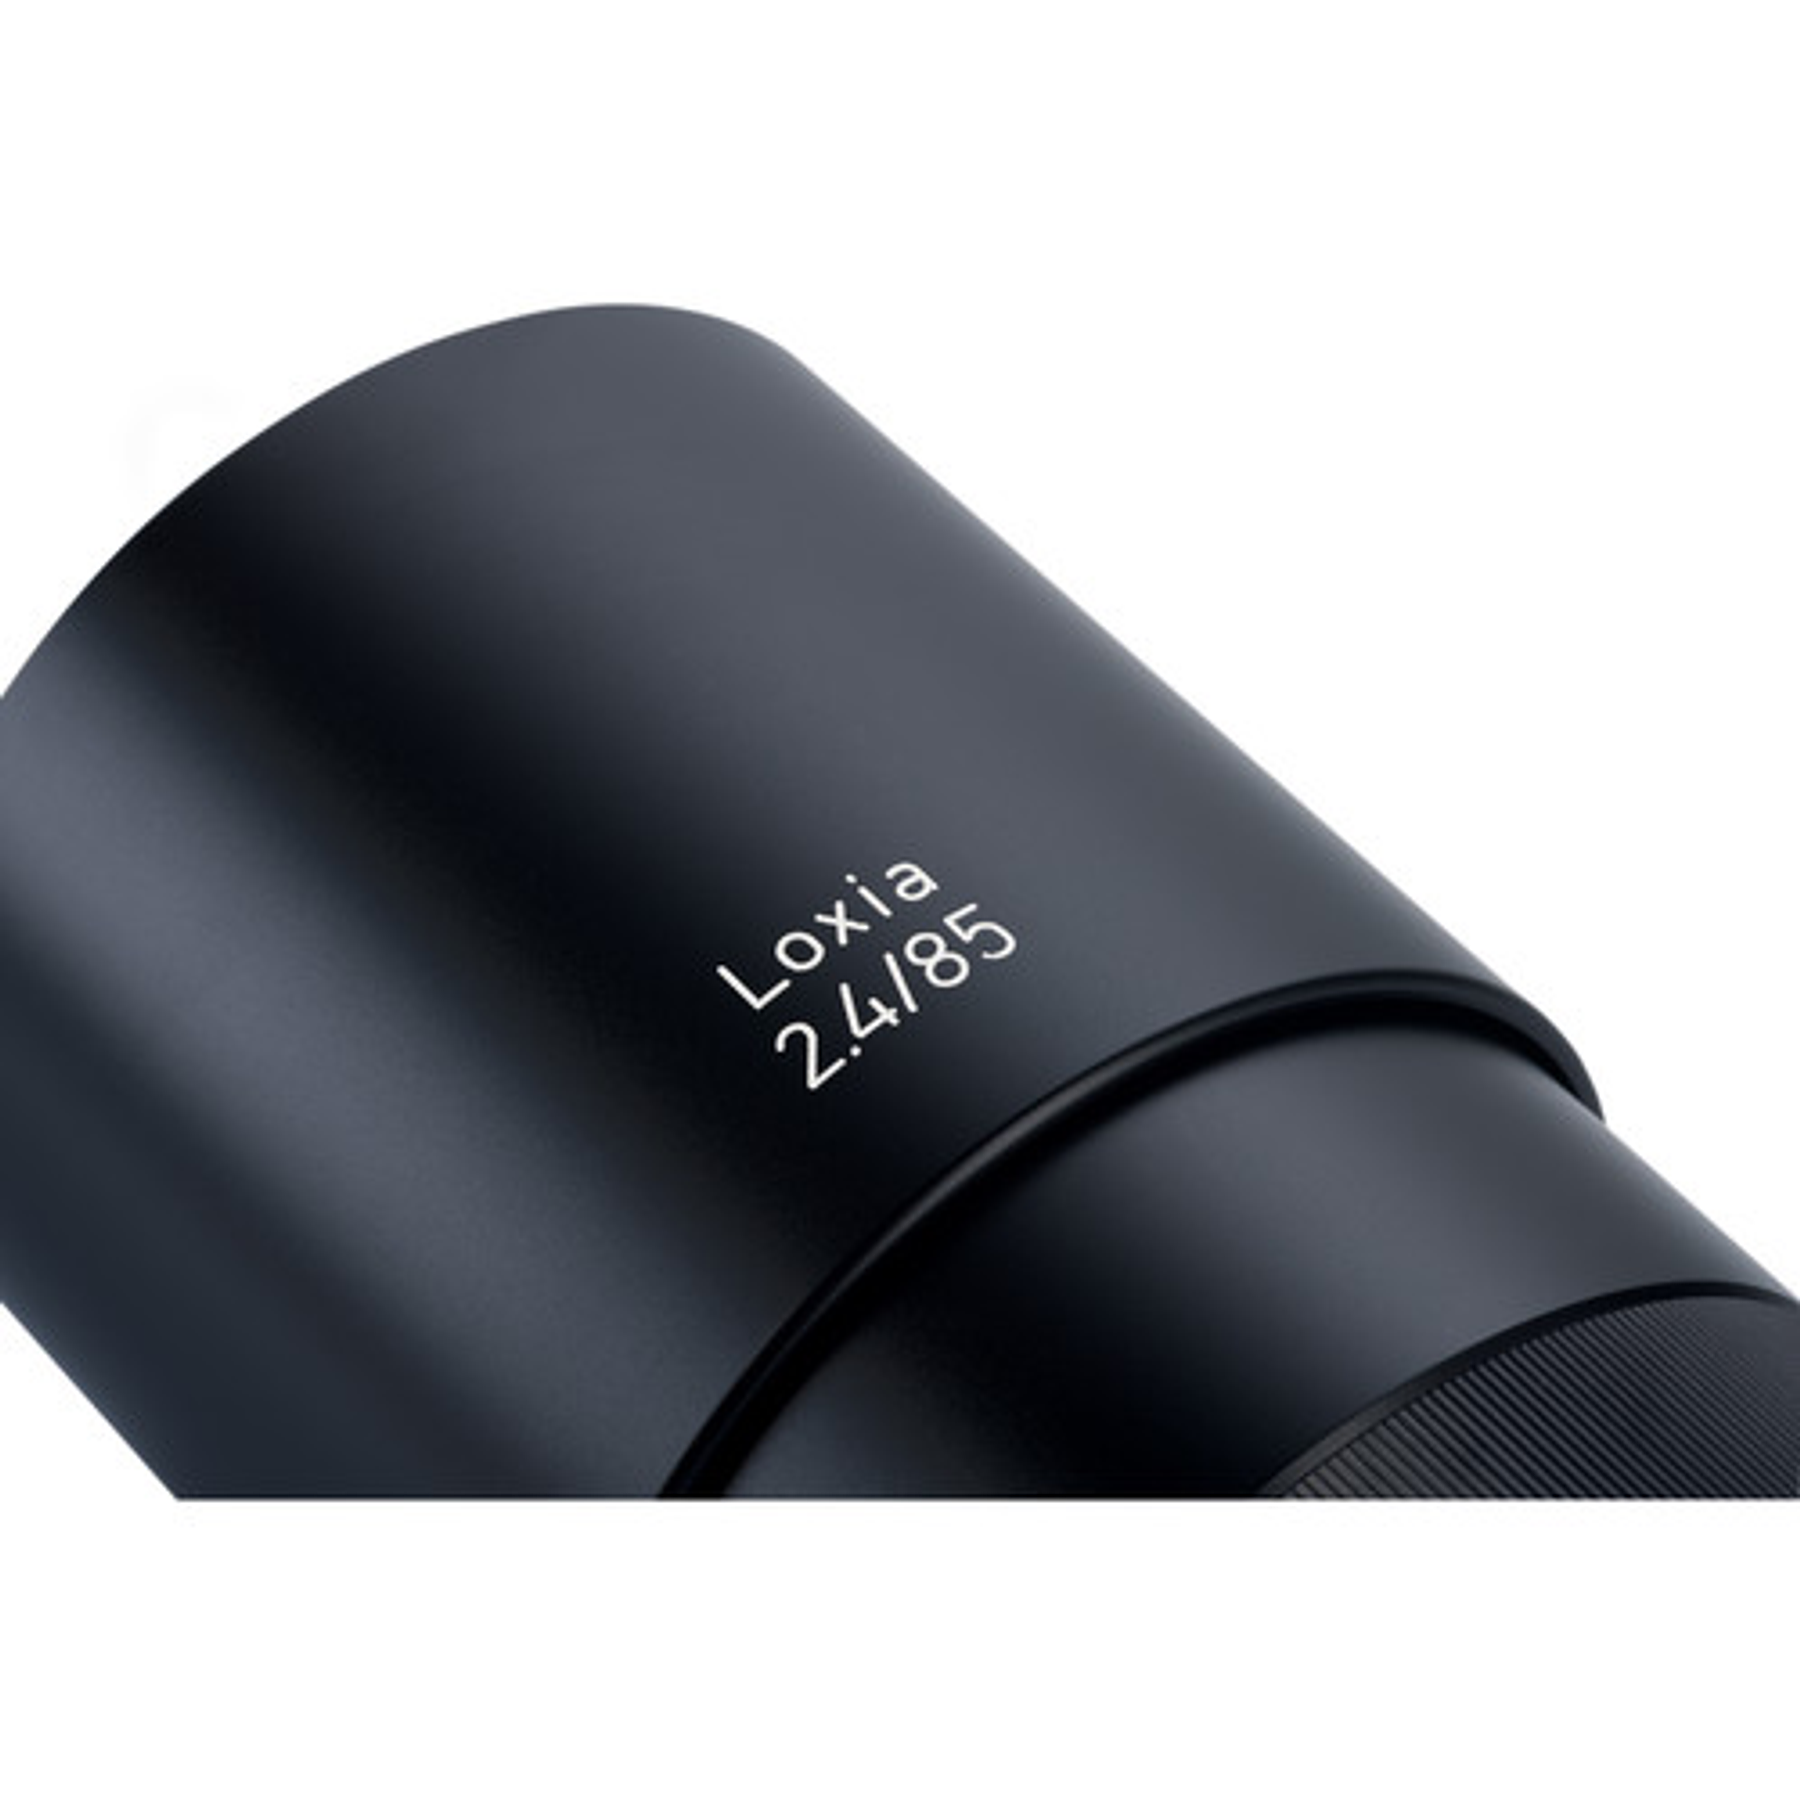 Zeiss Loxia 85mm f2.4 Sony FE